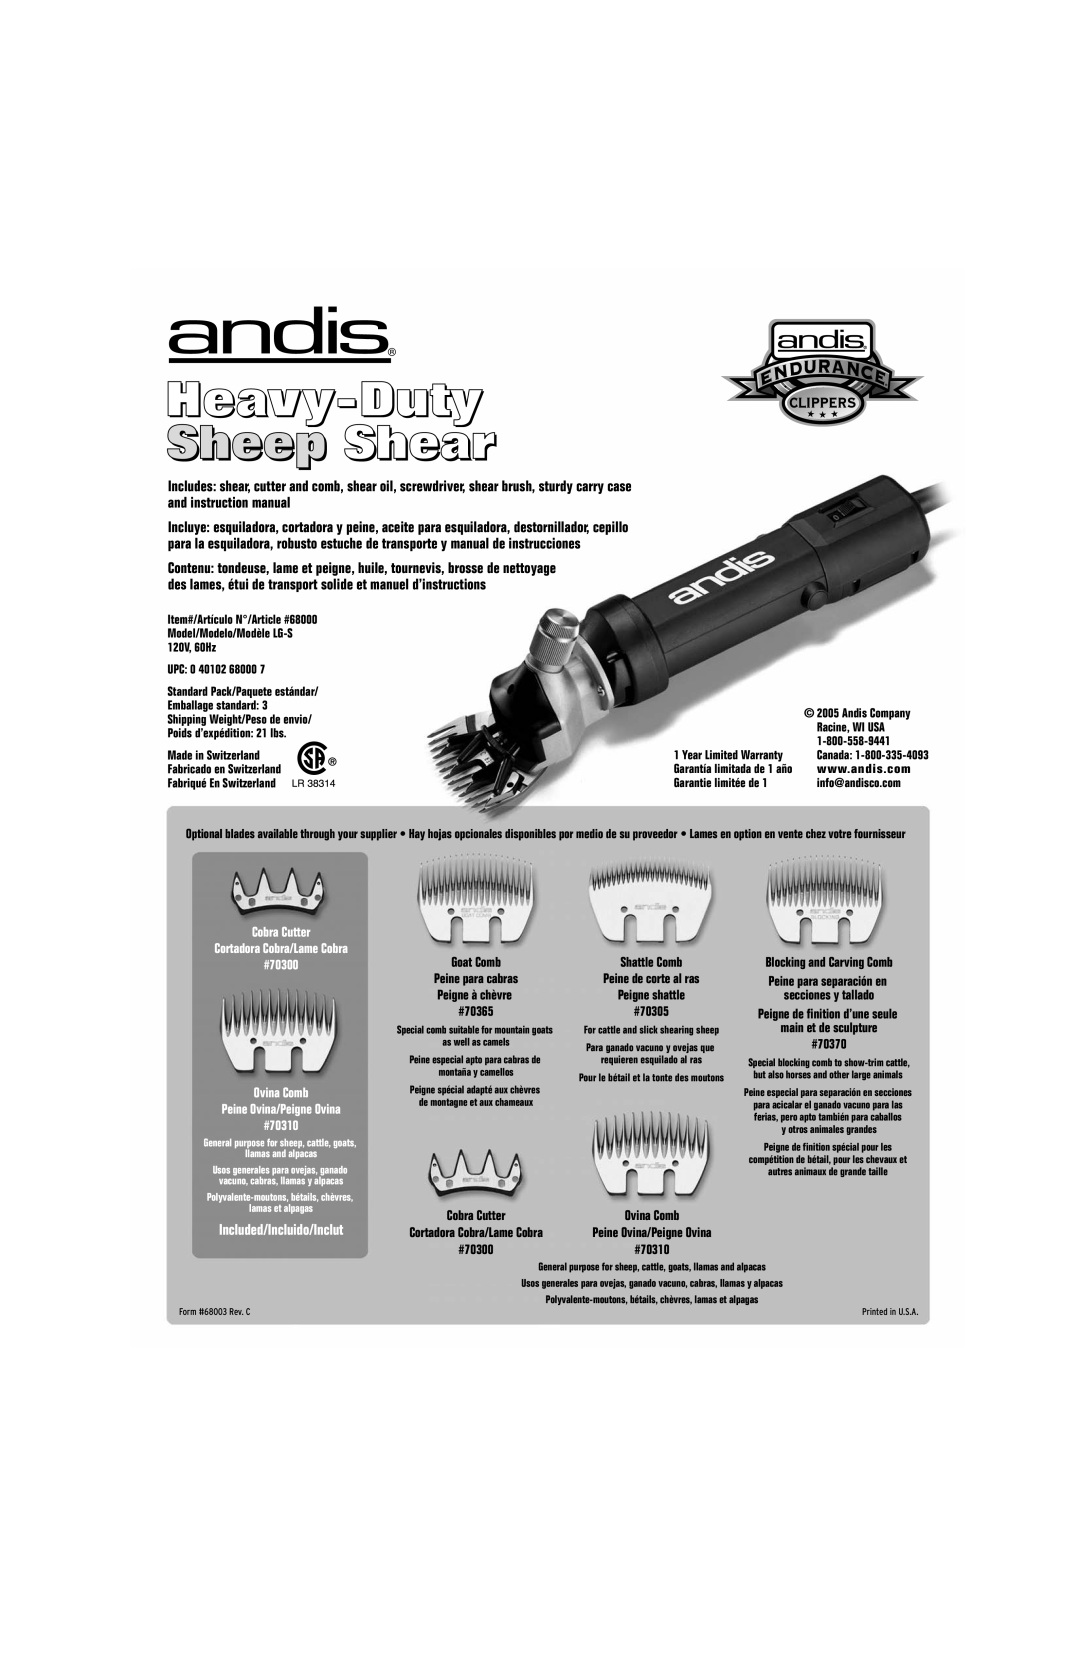 Andis Company LG-S Included/Incluido/Inclut, Cobra Cutter, #70300 Ovina Comb Peine Ovina/Peigne Ovina #70310, Goat Comb 